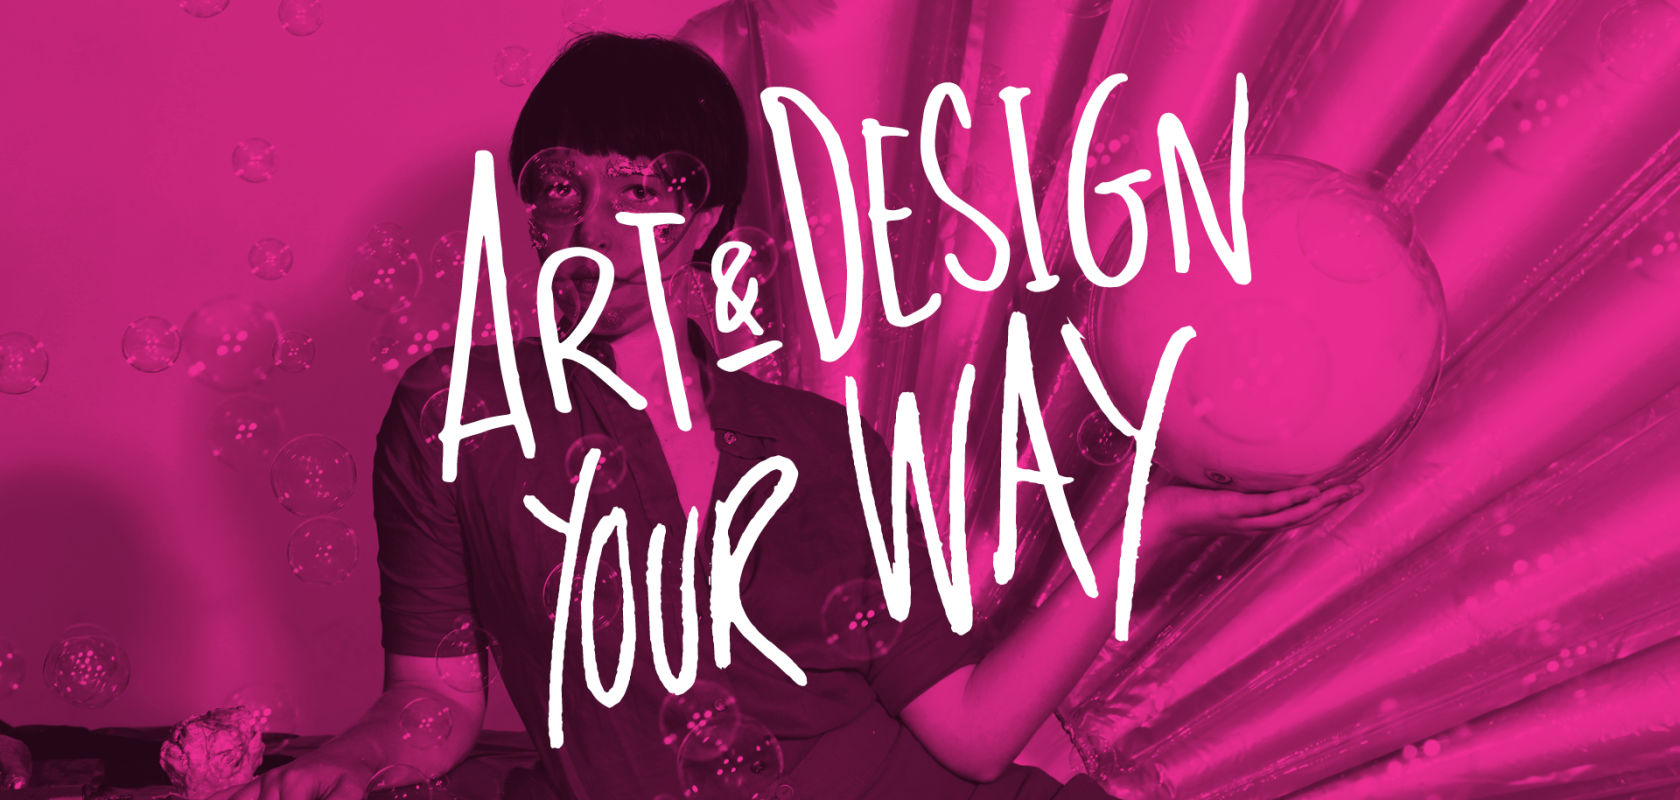 Art & Design | Arc UNSW Student Life